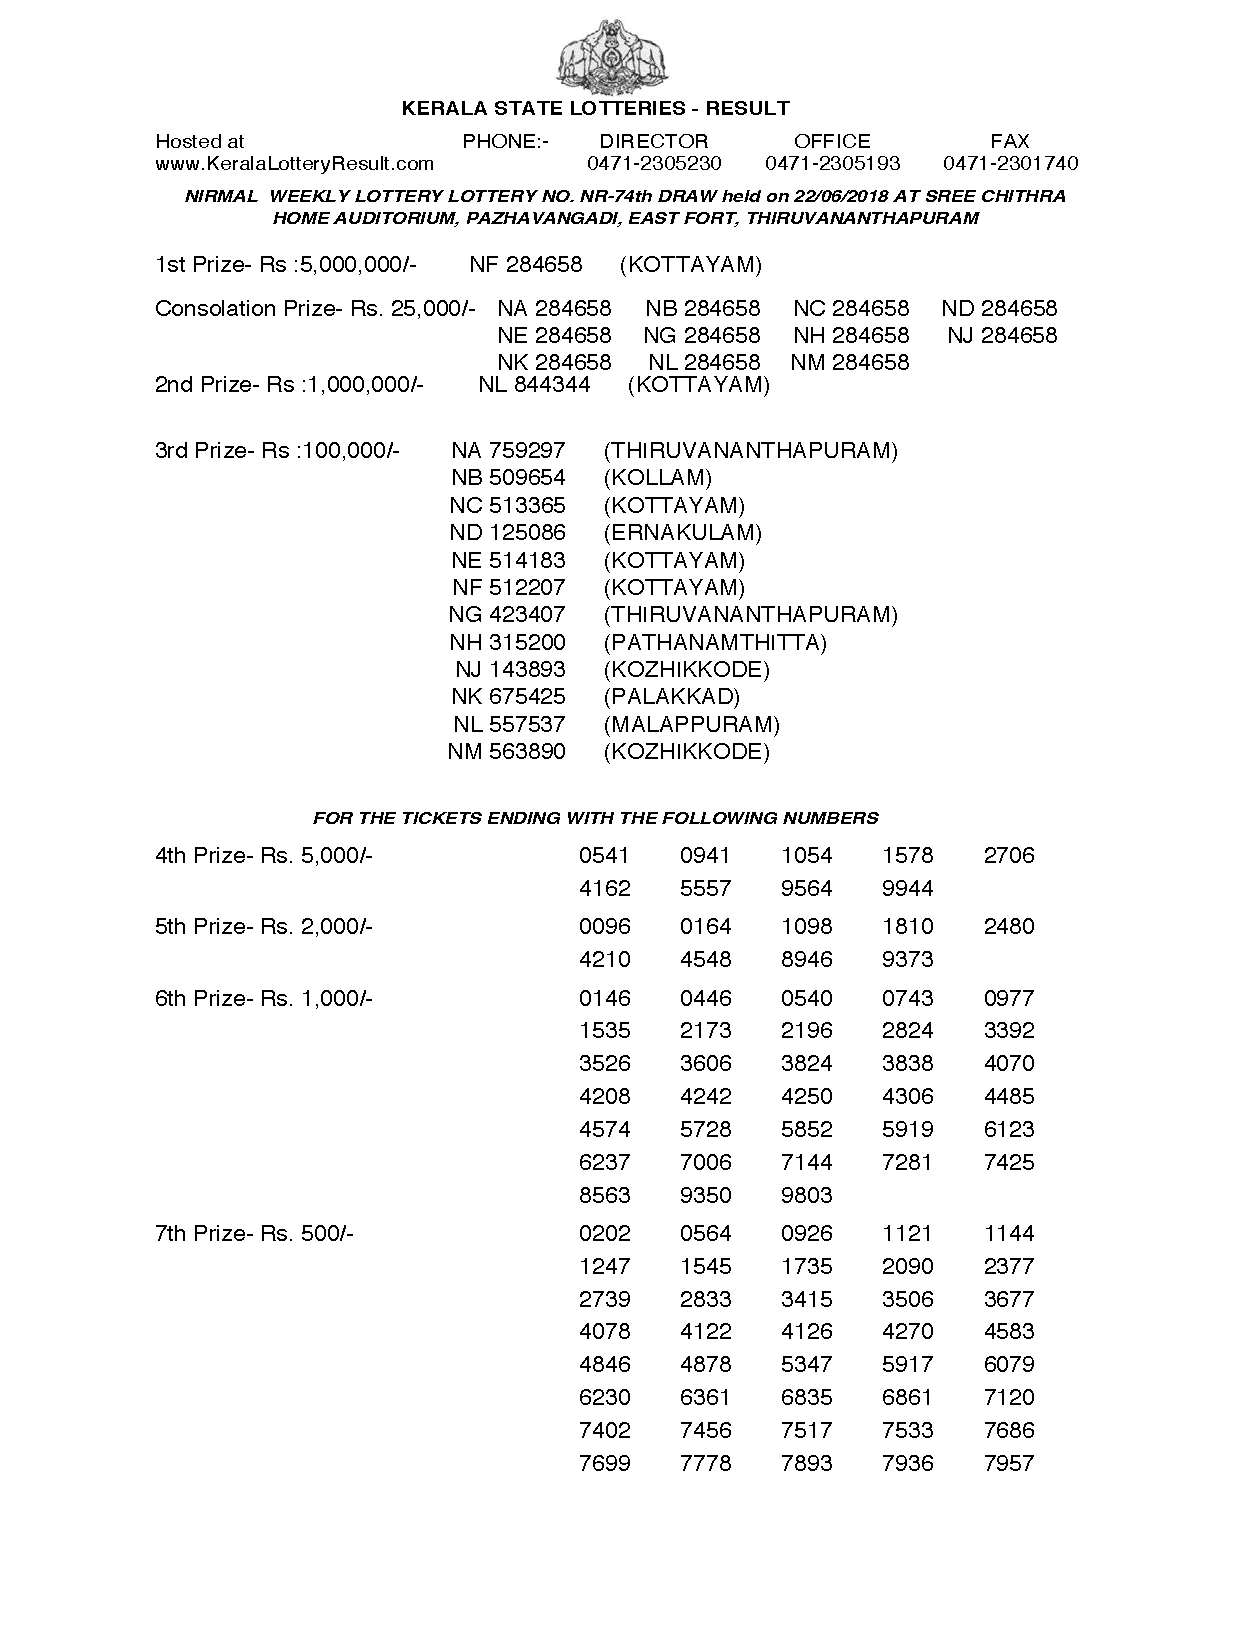 Nirmal NR74 Kerala Lottery Results Screenshot: Page 1